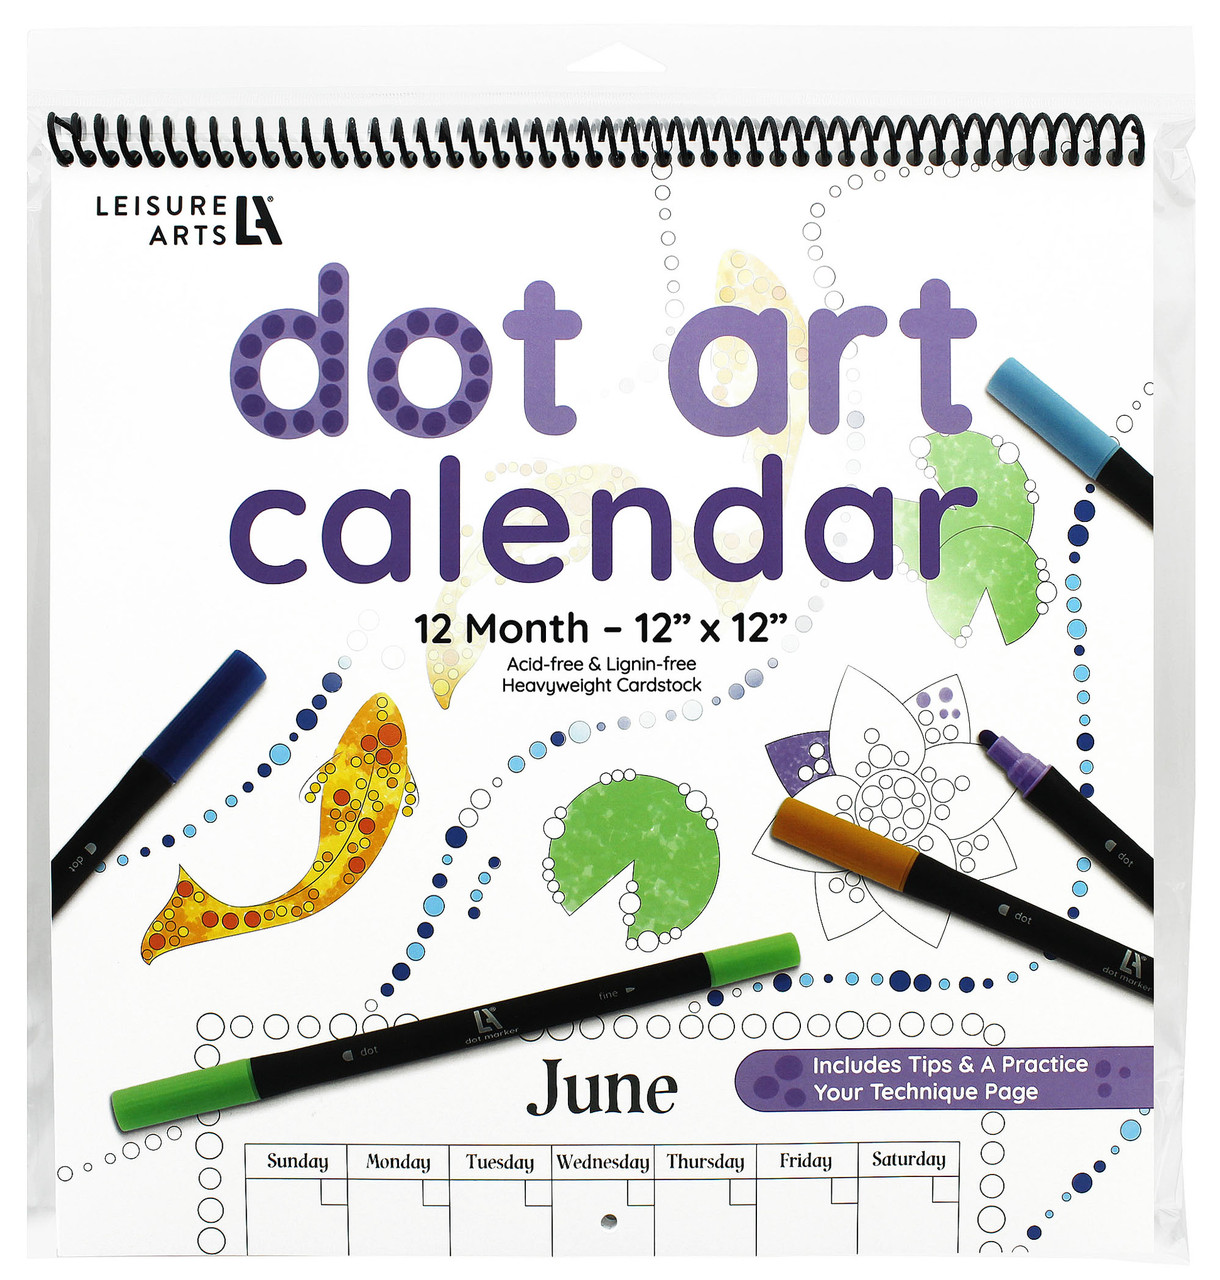 Leisure Arts Dot Art Pad/Marker Set Spirit Spring